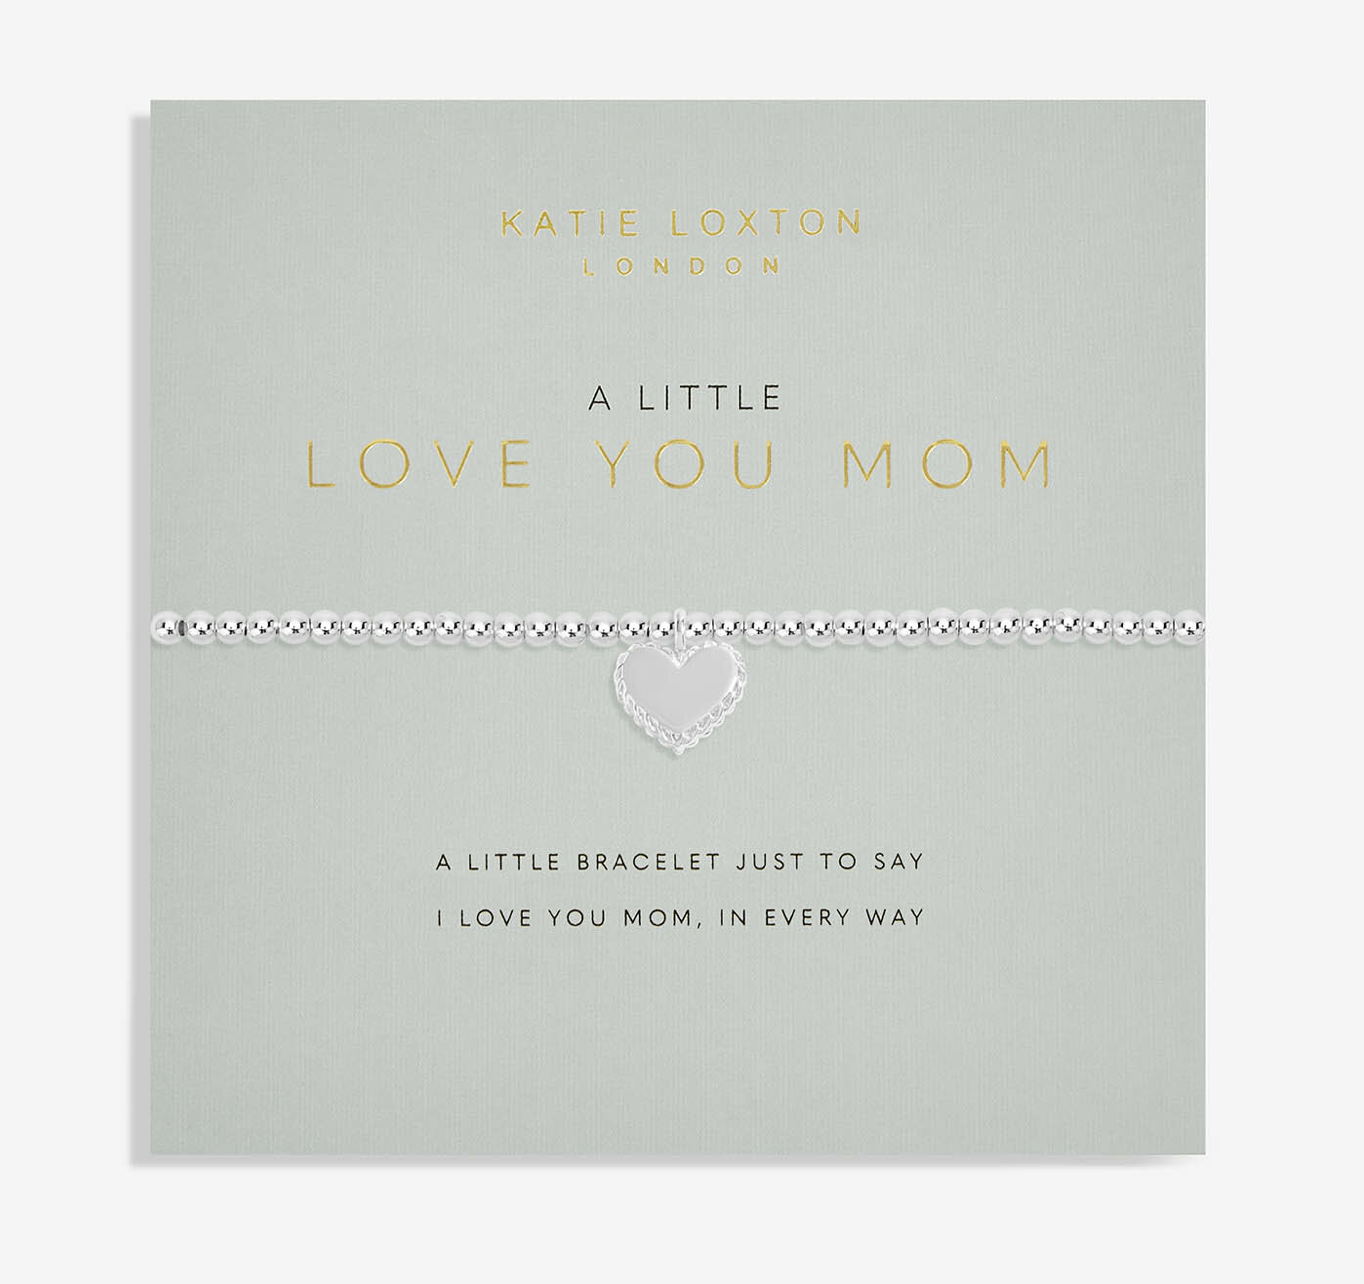 A Little "Love You Mom" Bracelet